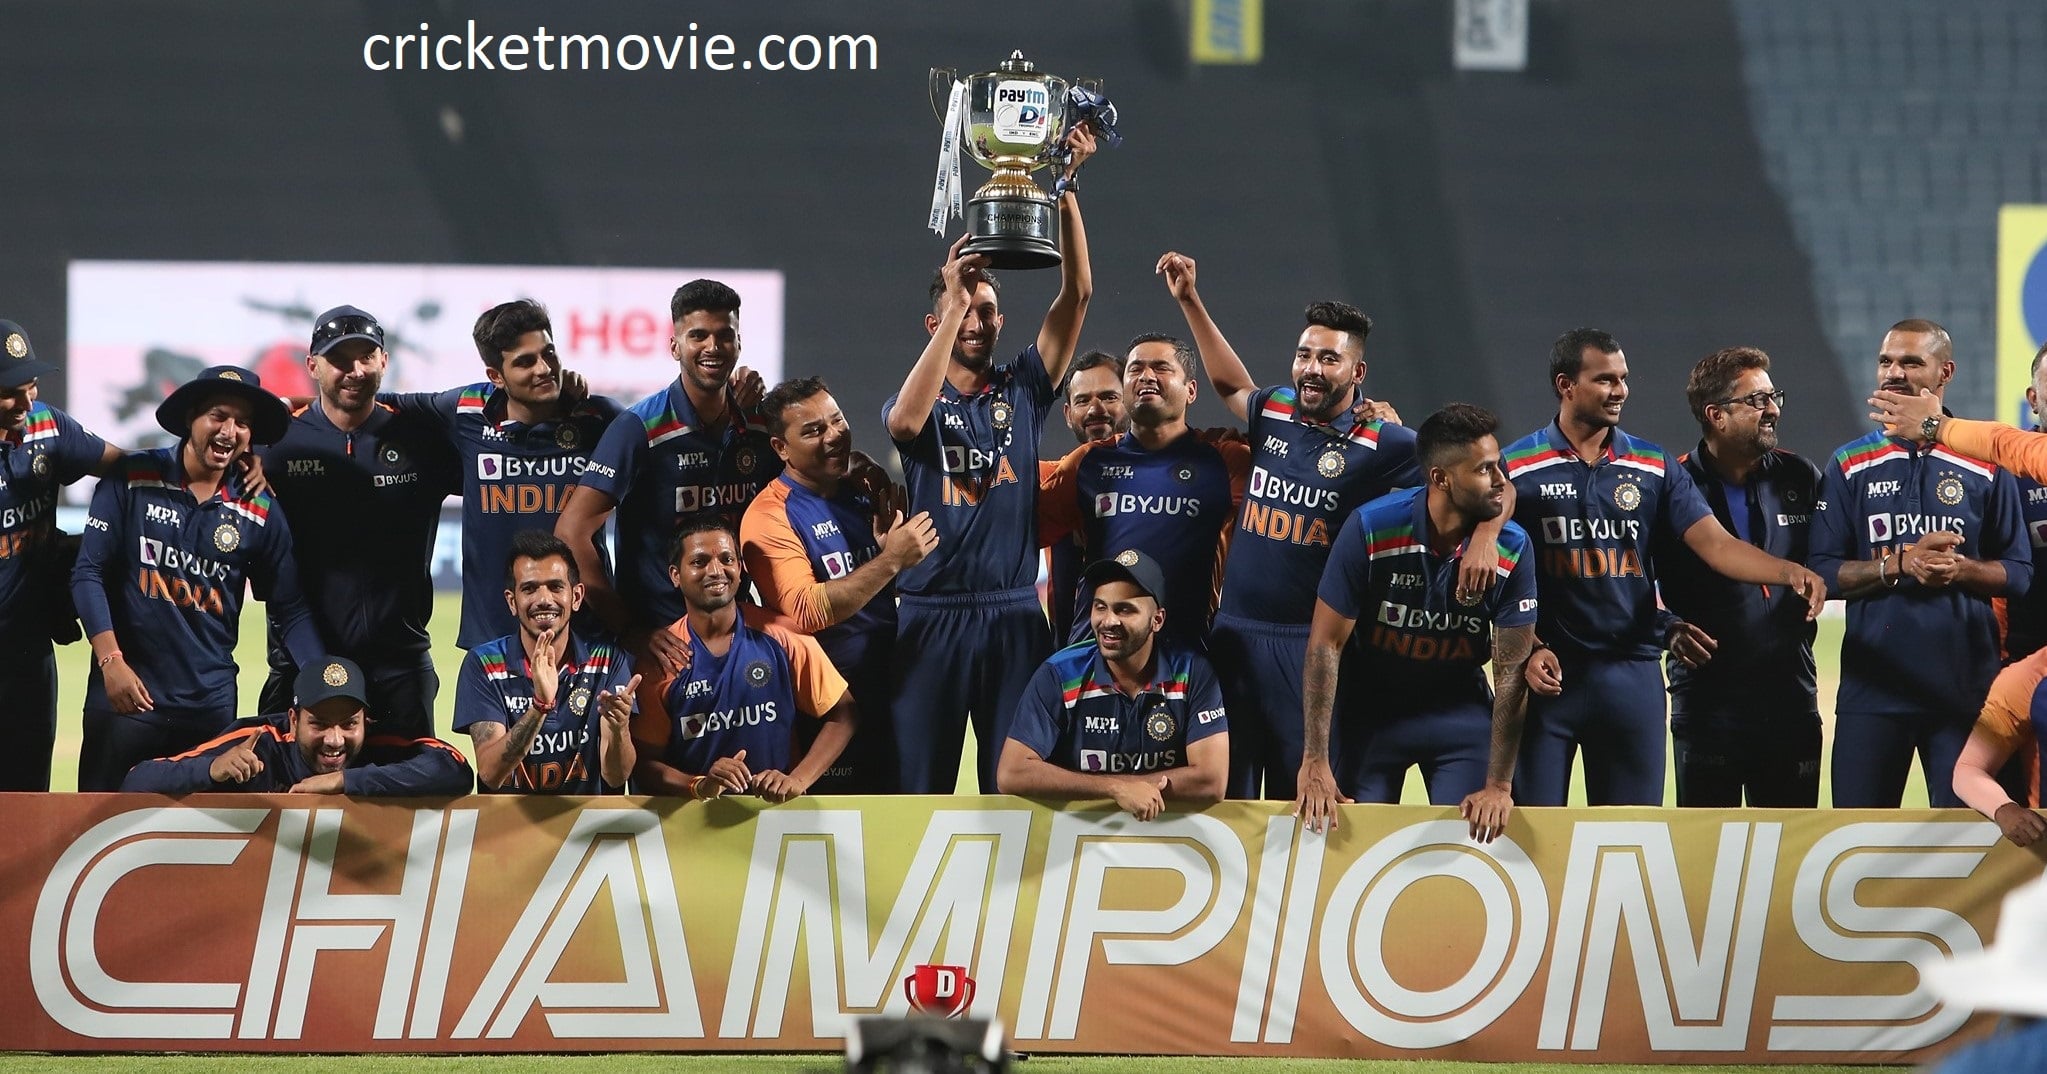 India won paytm ODI series against England-cricketmovie.com